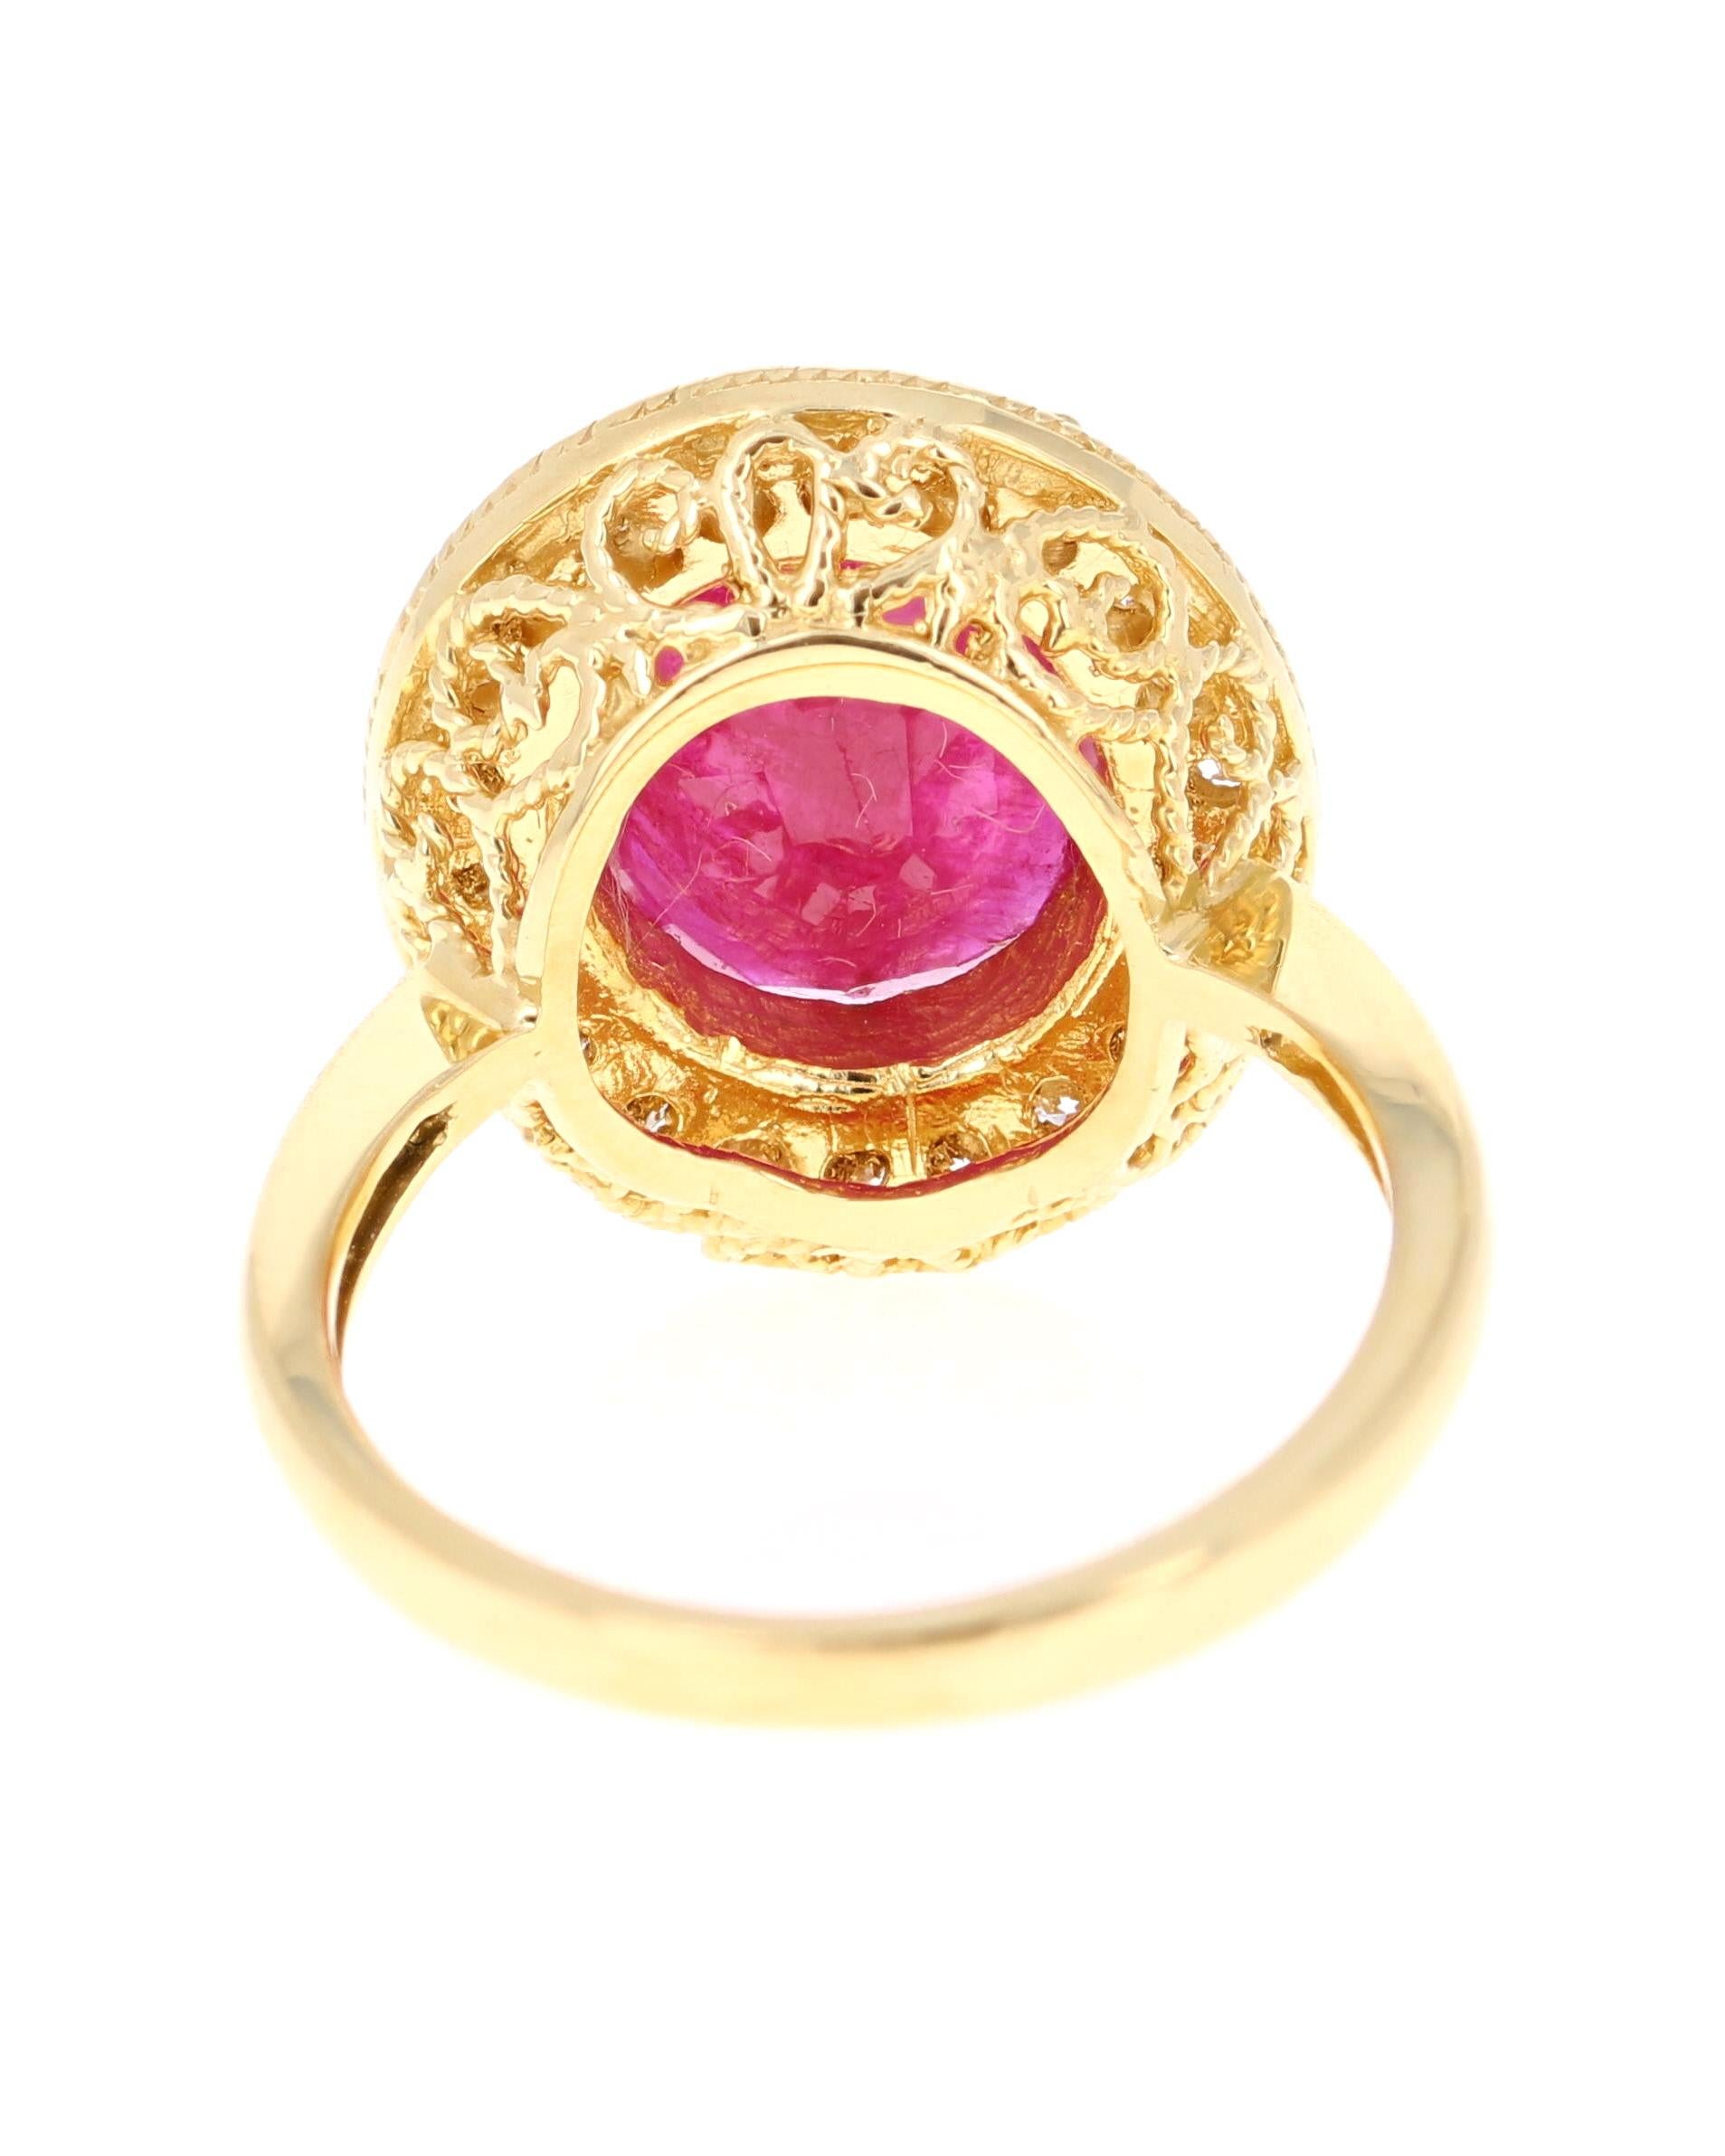 Oval Cut 5.01 Carat Ruby Diamond 18 Karat Yellow Gold Ring